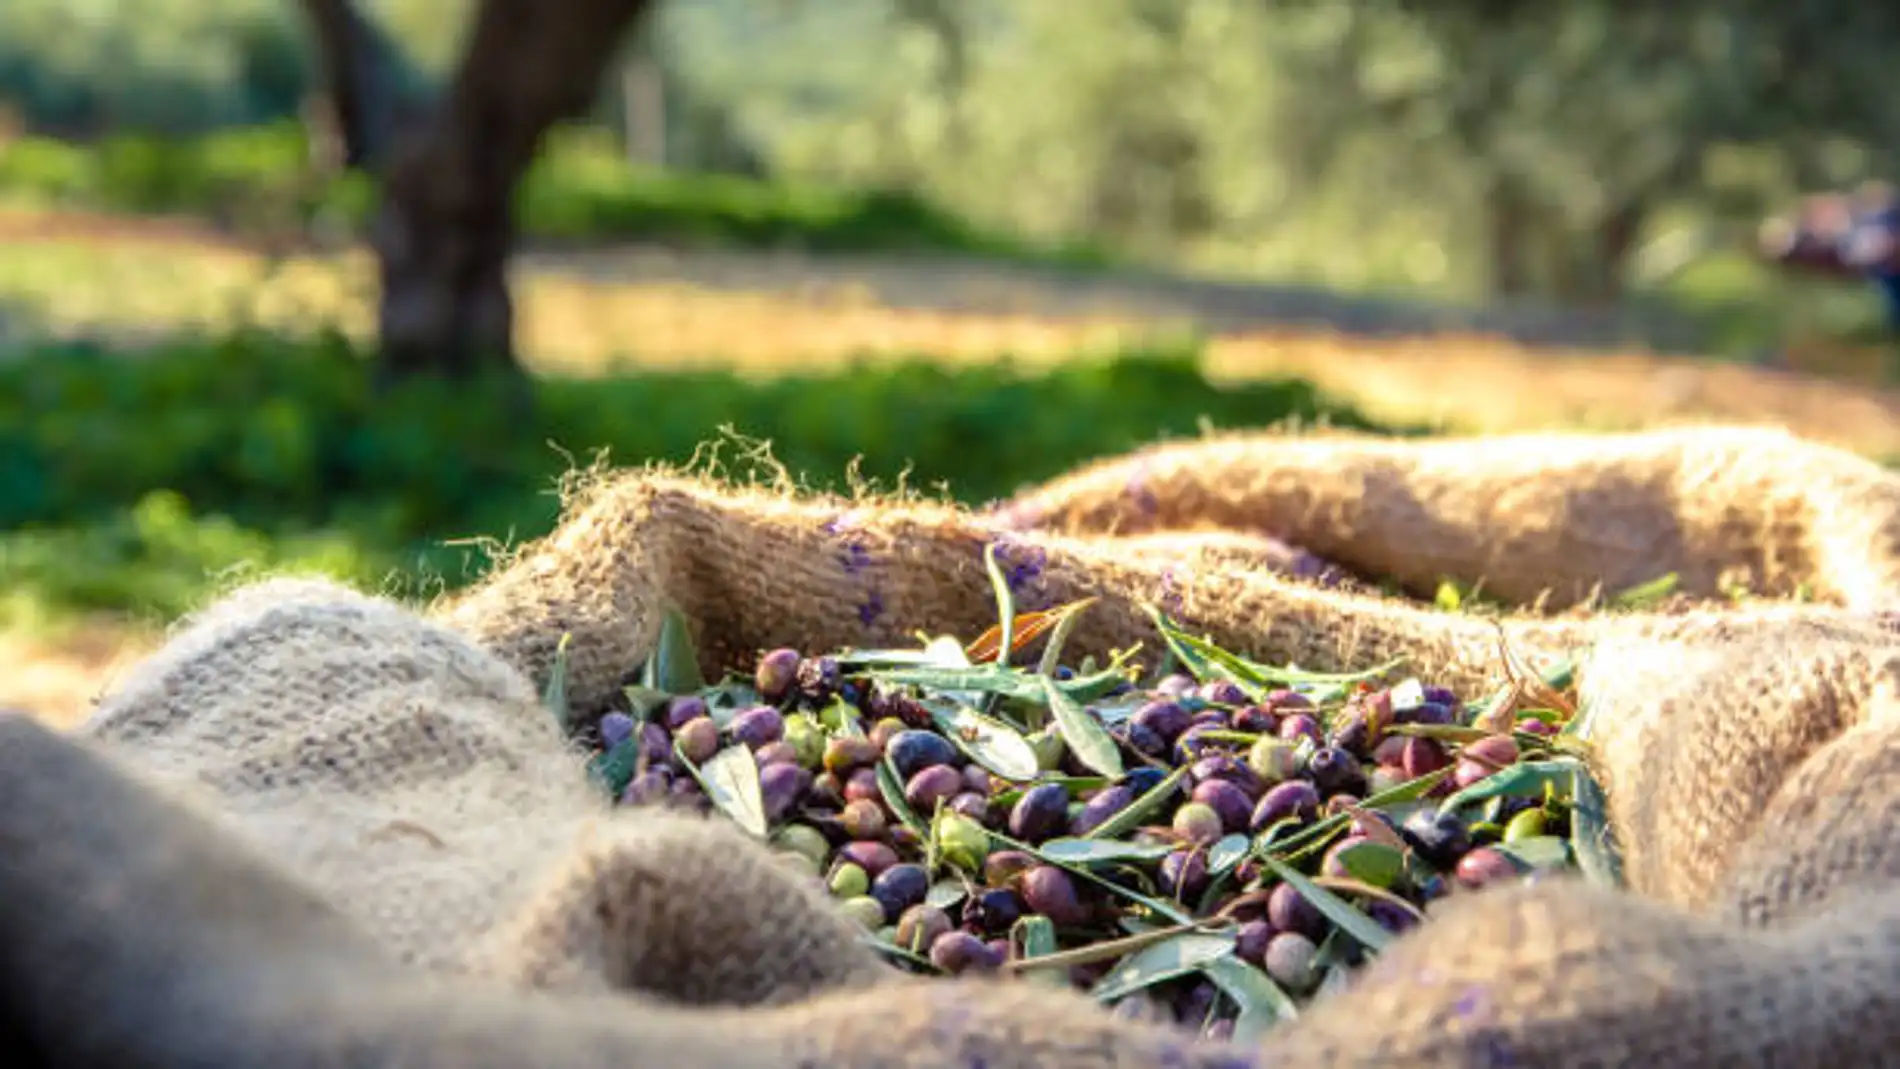 Los agricultores aragoneses esperan recoger 11.500 toneladas de olivas